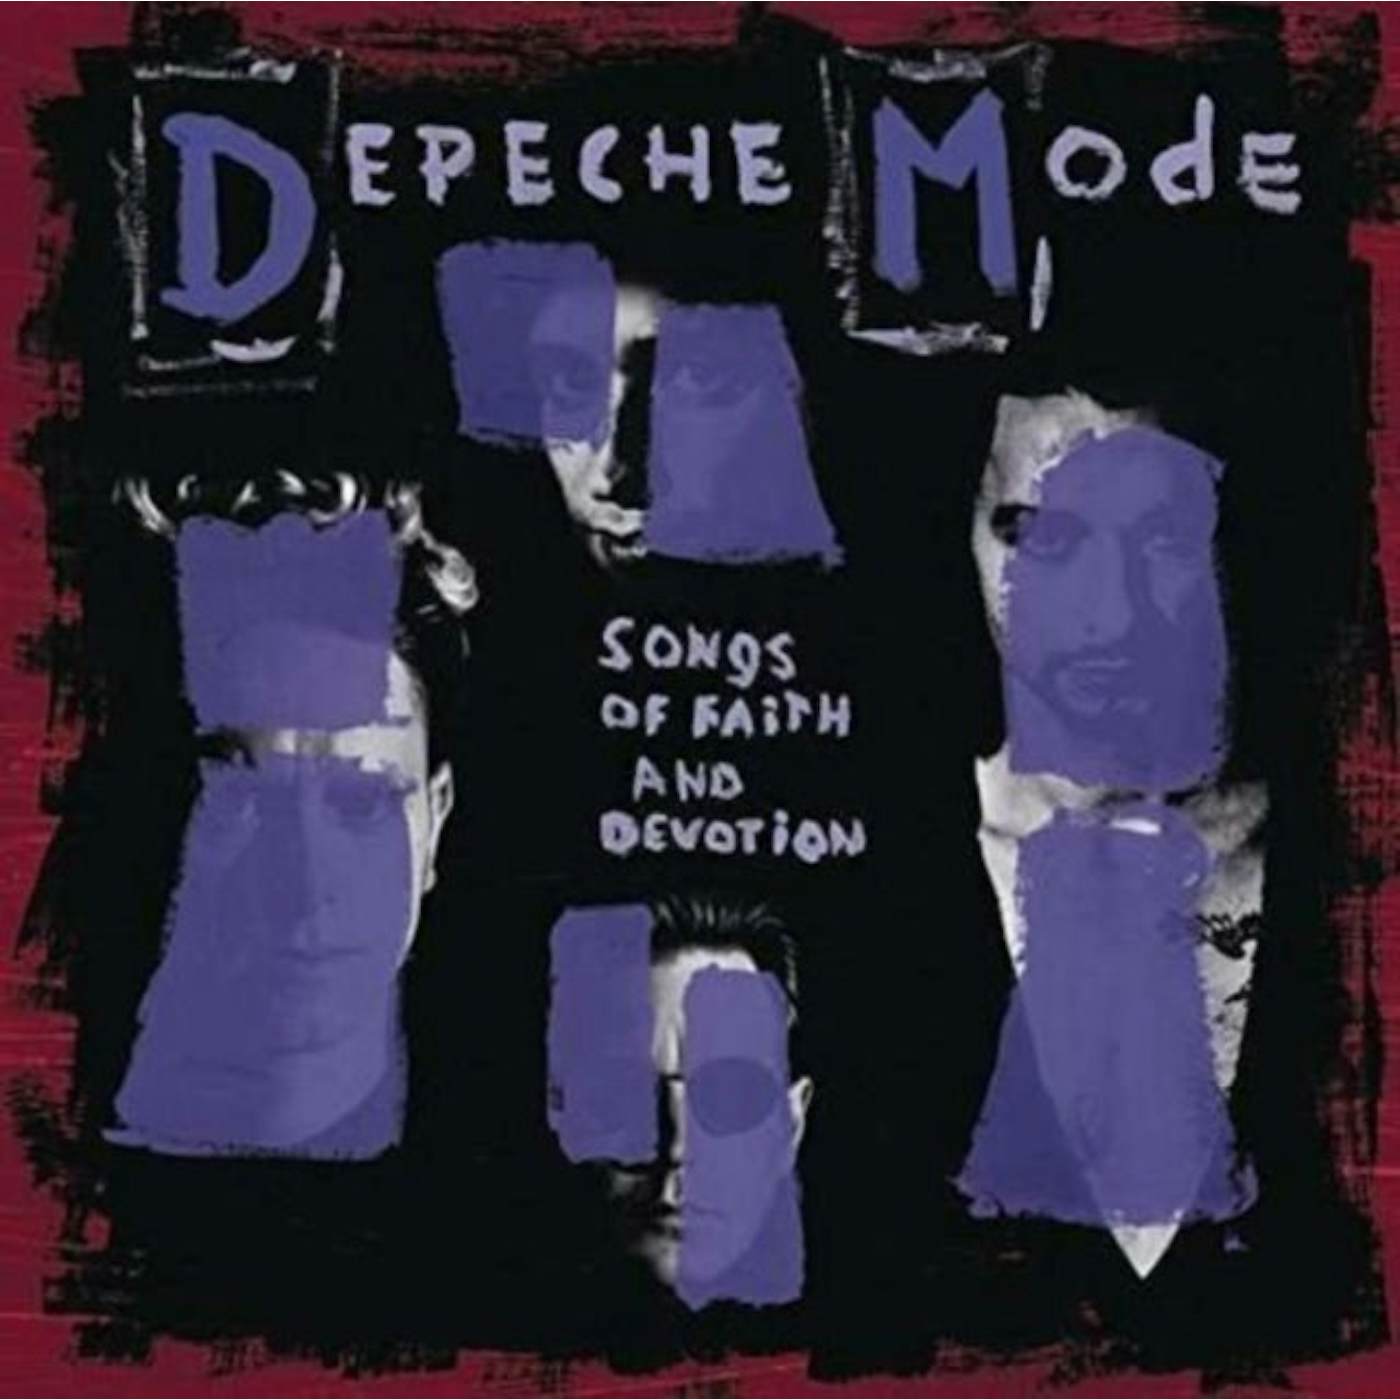 Depeche Mode LP Vinyl Record - Songs Of Faith And Devotion